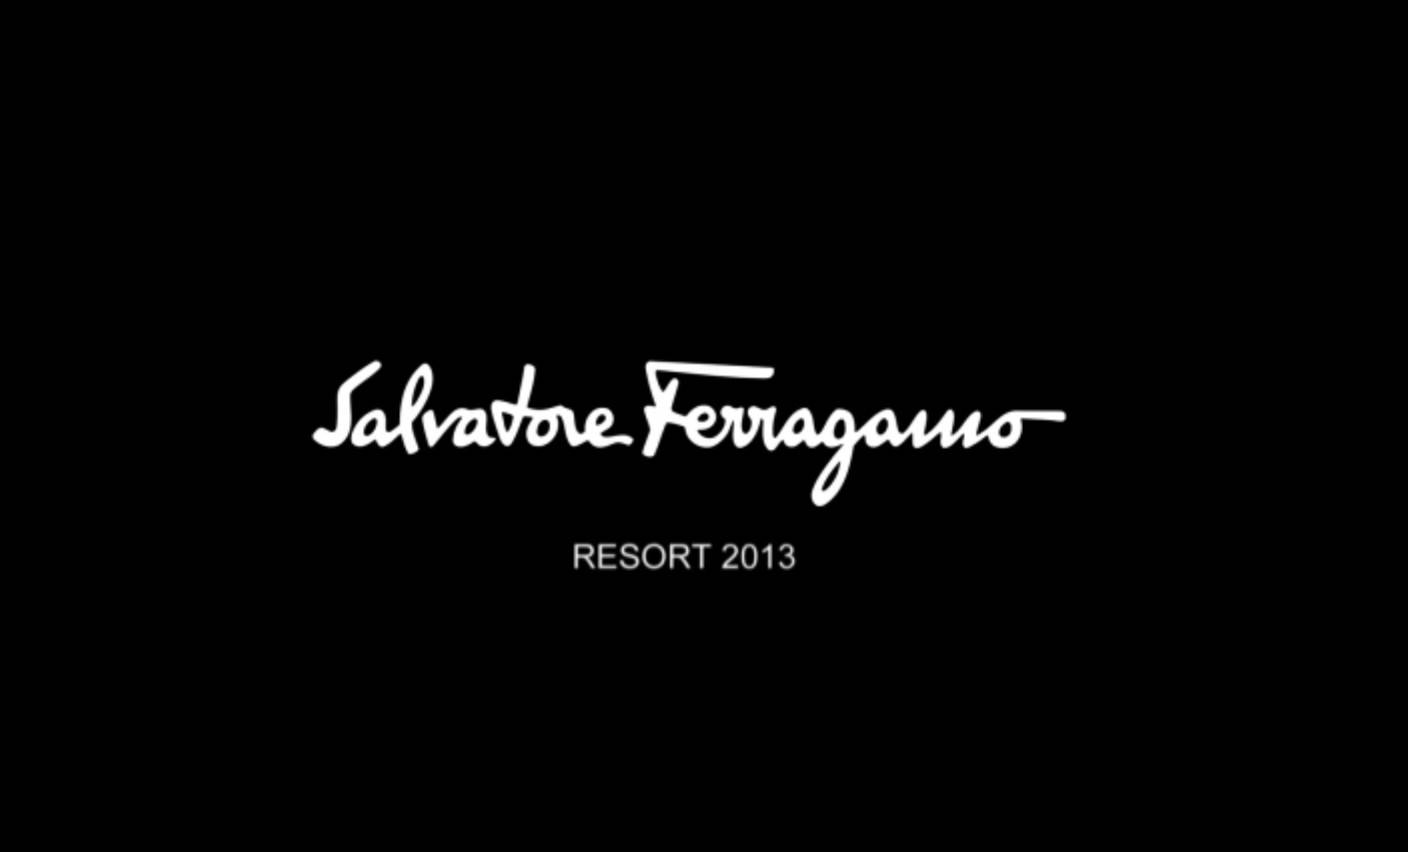 Salvatore Ferragamo Resort 2013 Background